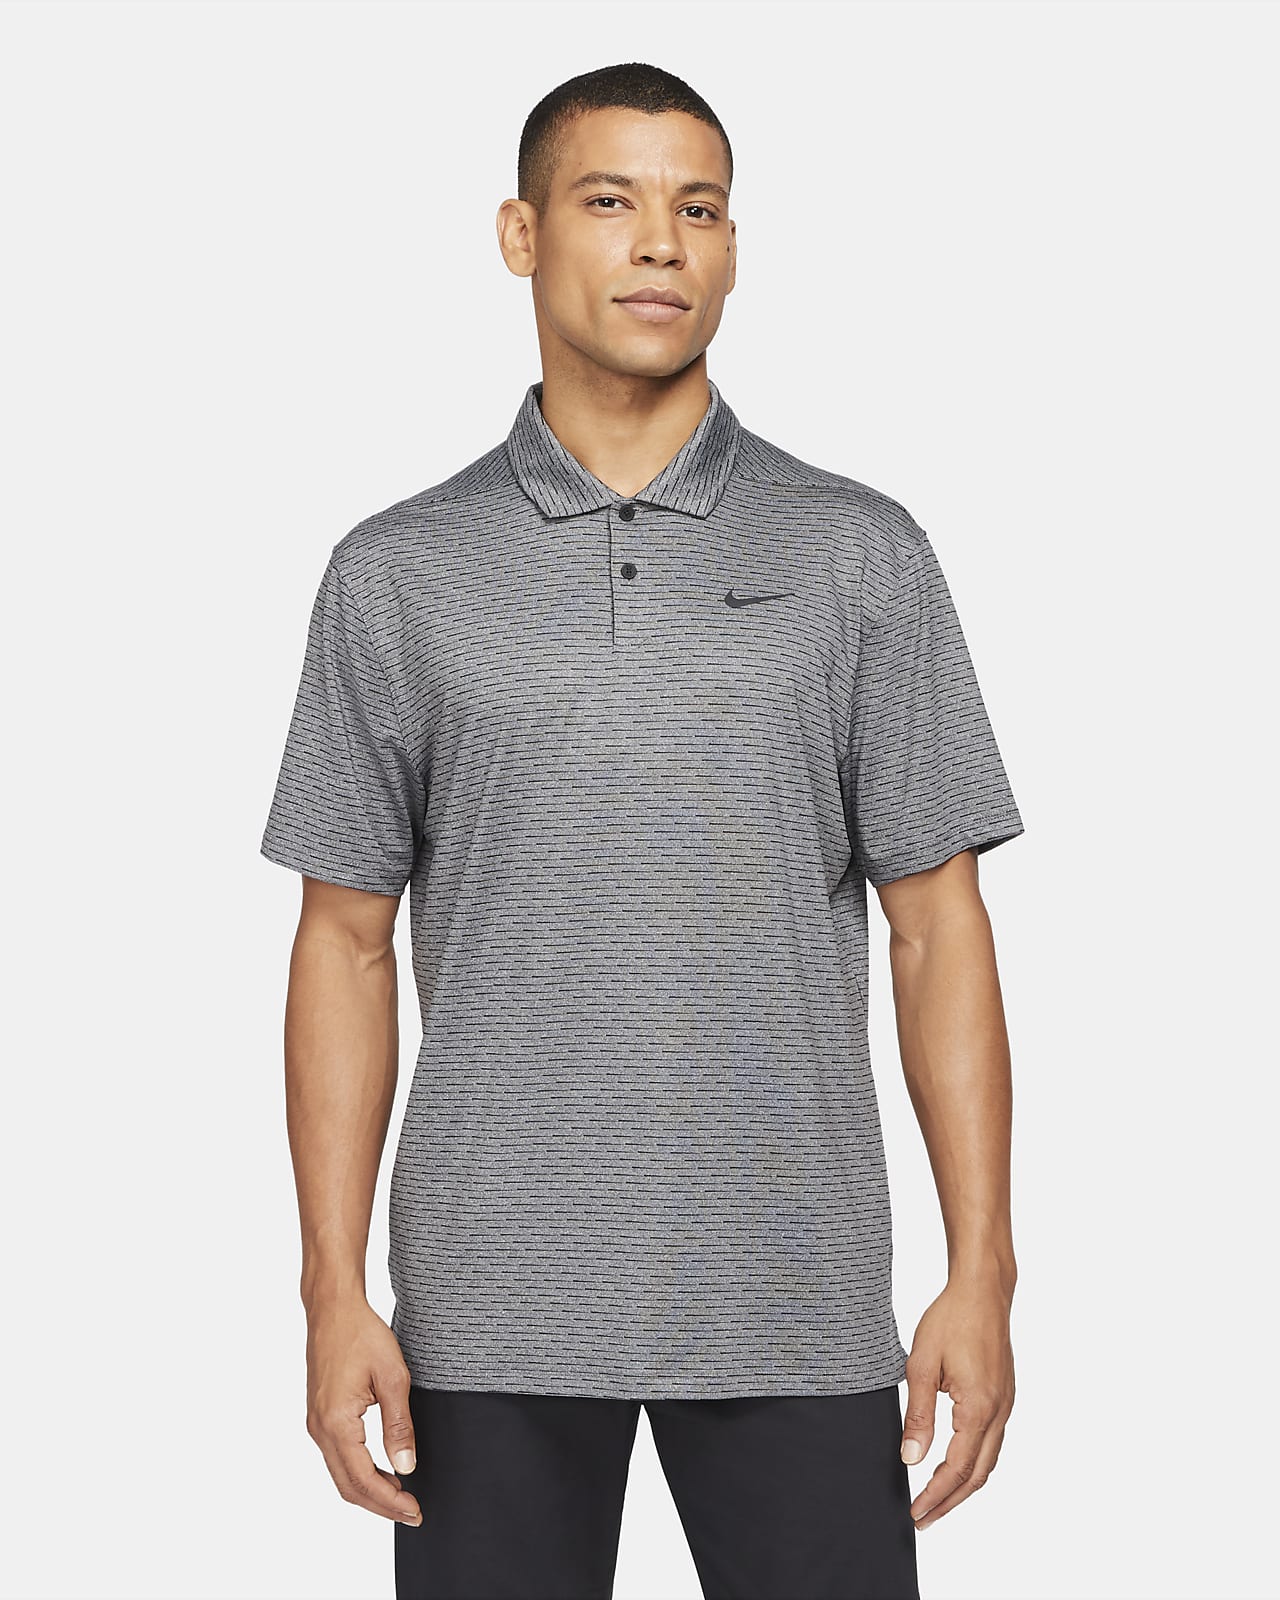 Nike Dri-FIT Vapor Men's Striped Golf 